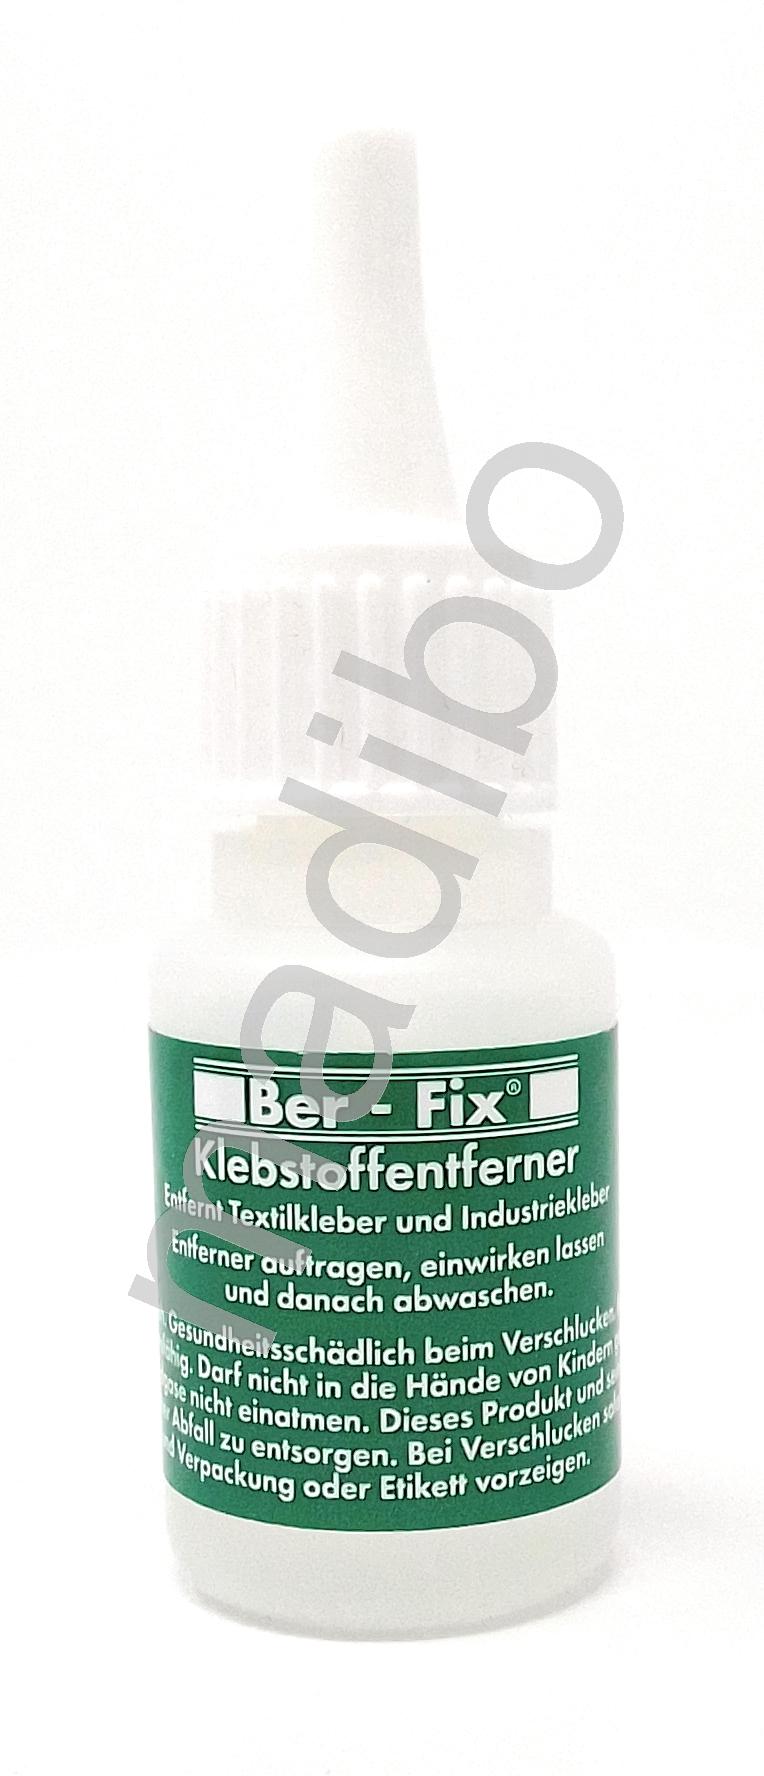 Ber-Fix Klebstoffentferner - Inhalt: 20 g